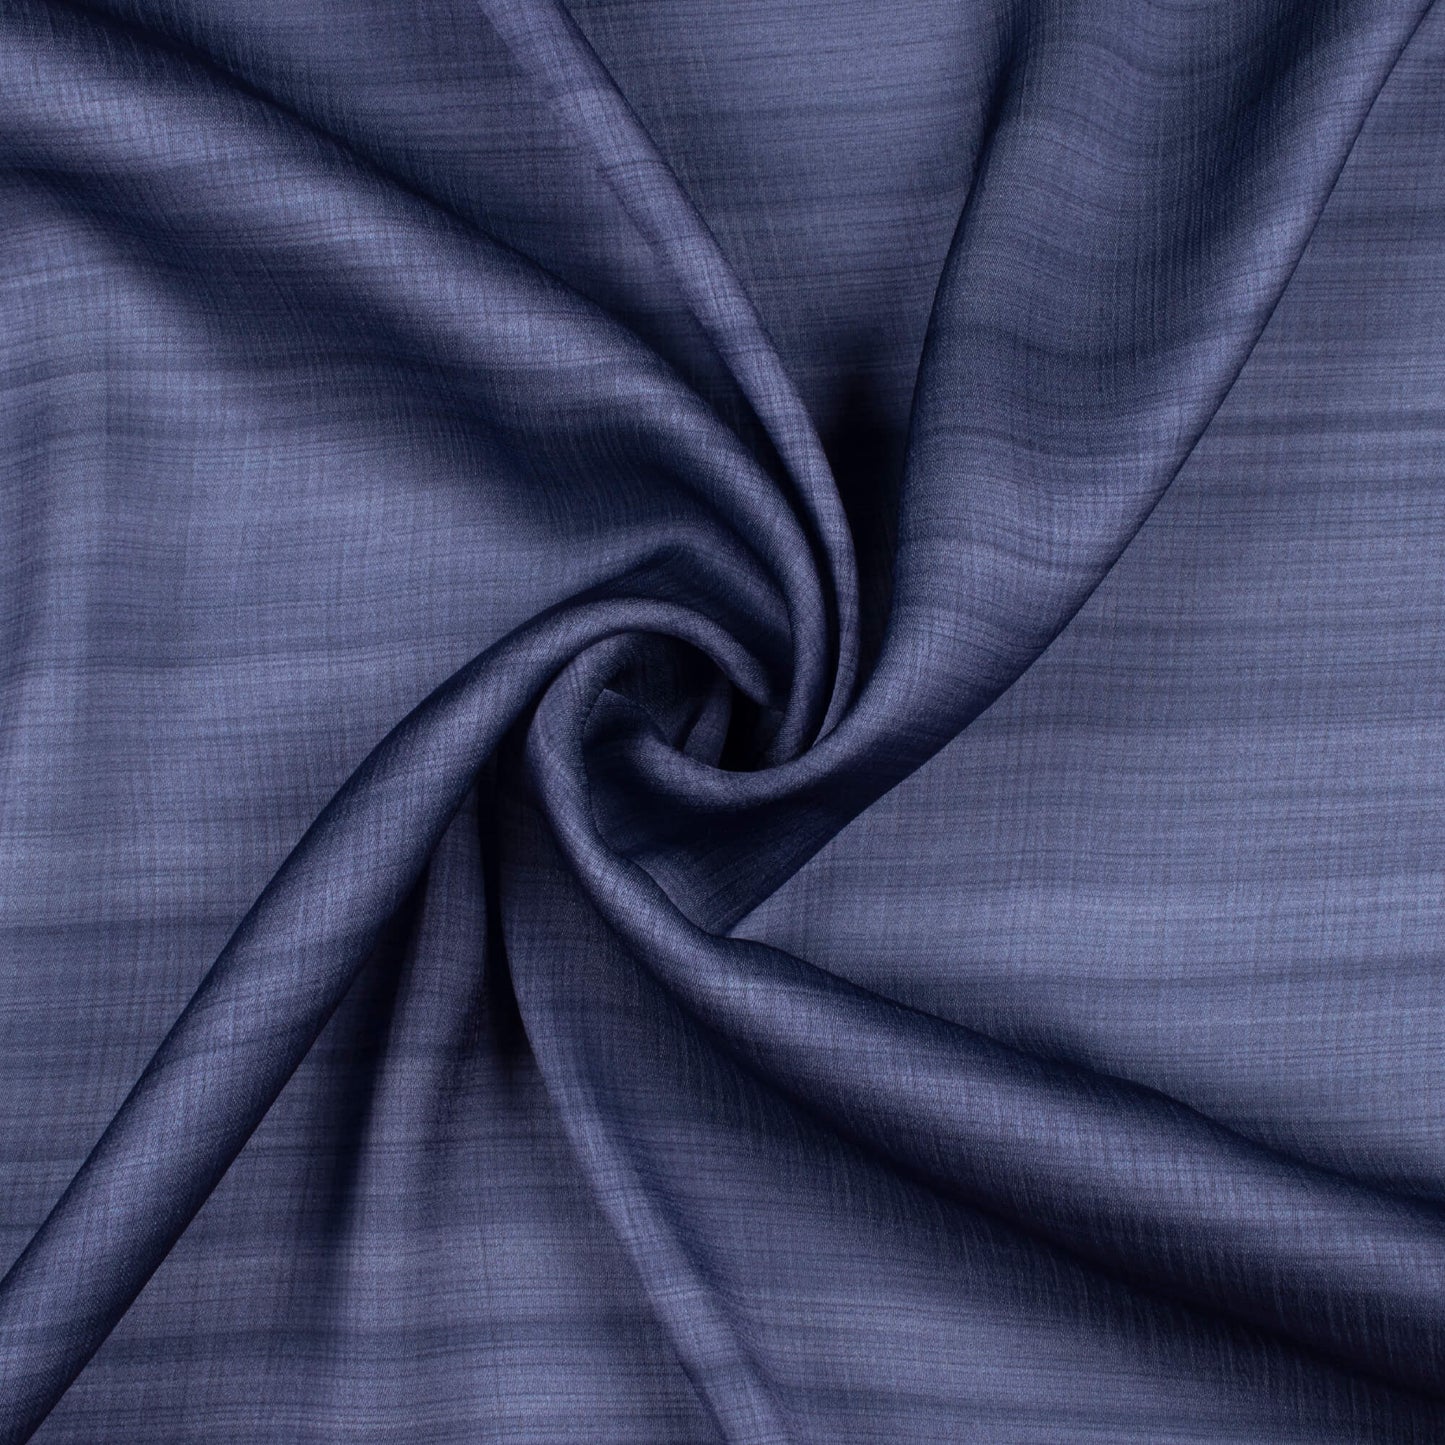 Independence Blue Texture Pattern Digital Print Chiffon Satin Fabric